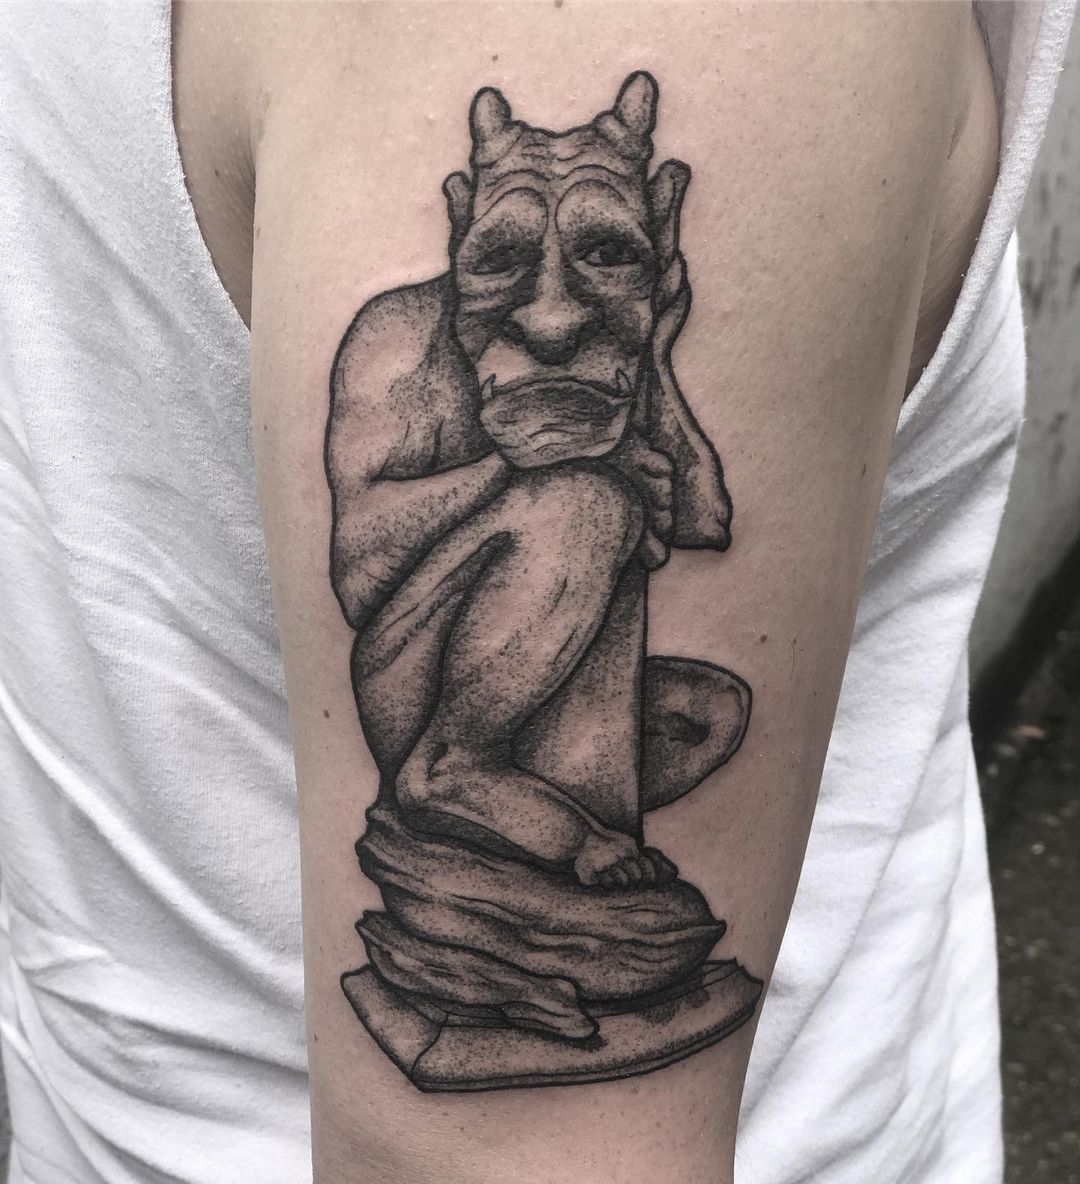 Statue Inspired Gargoyle Tattoos Over Forearm